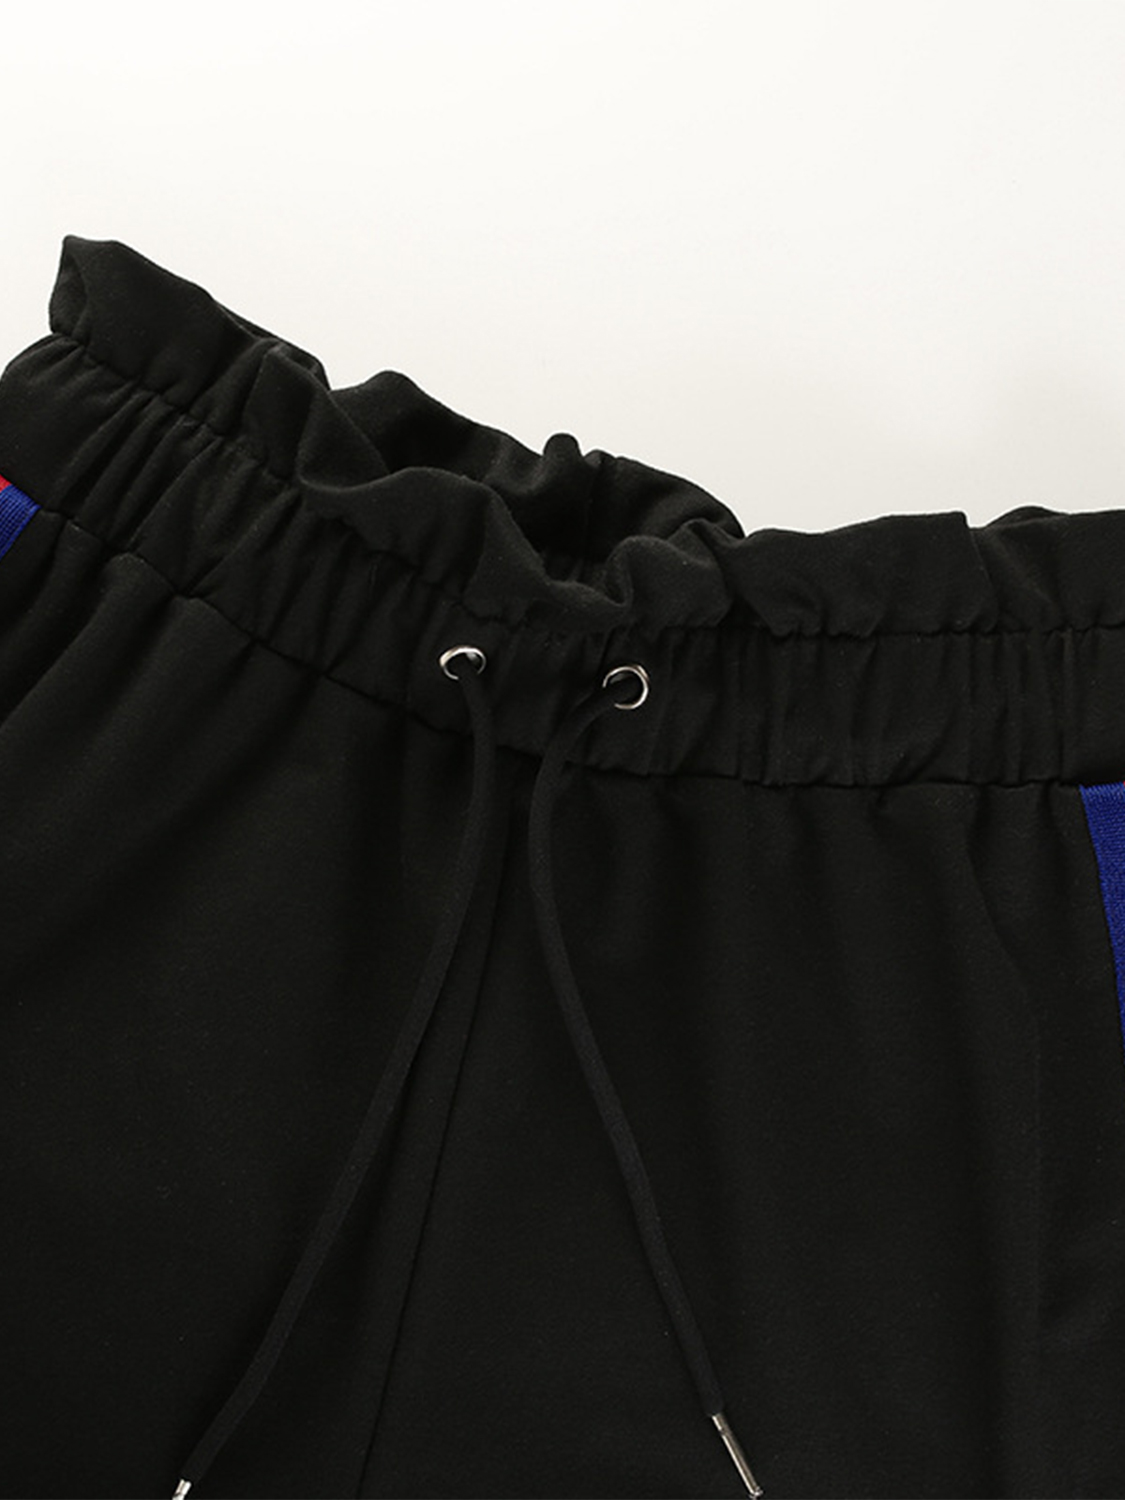 Black High Waist Split Side Shorts | Choies